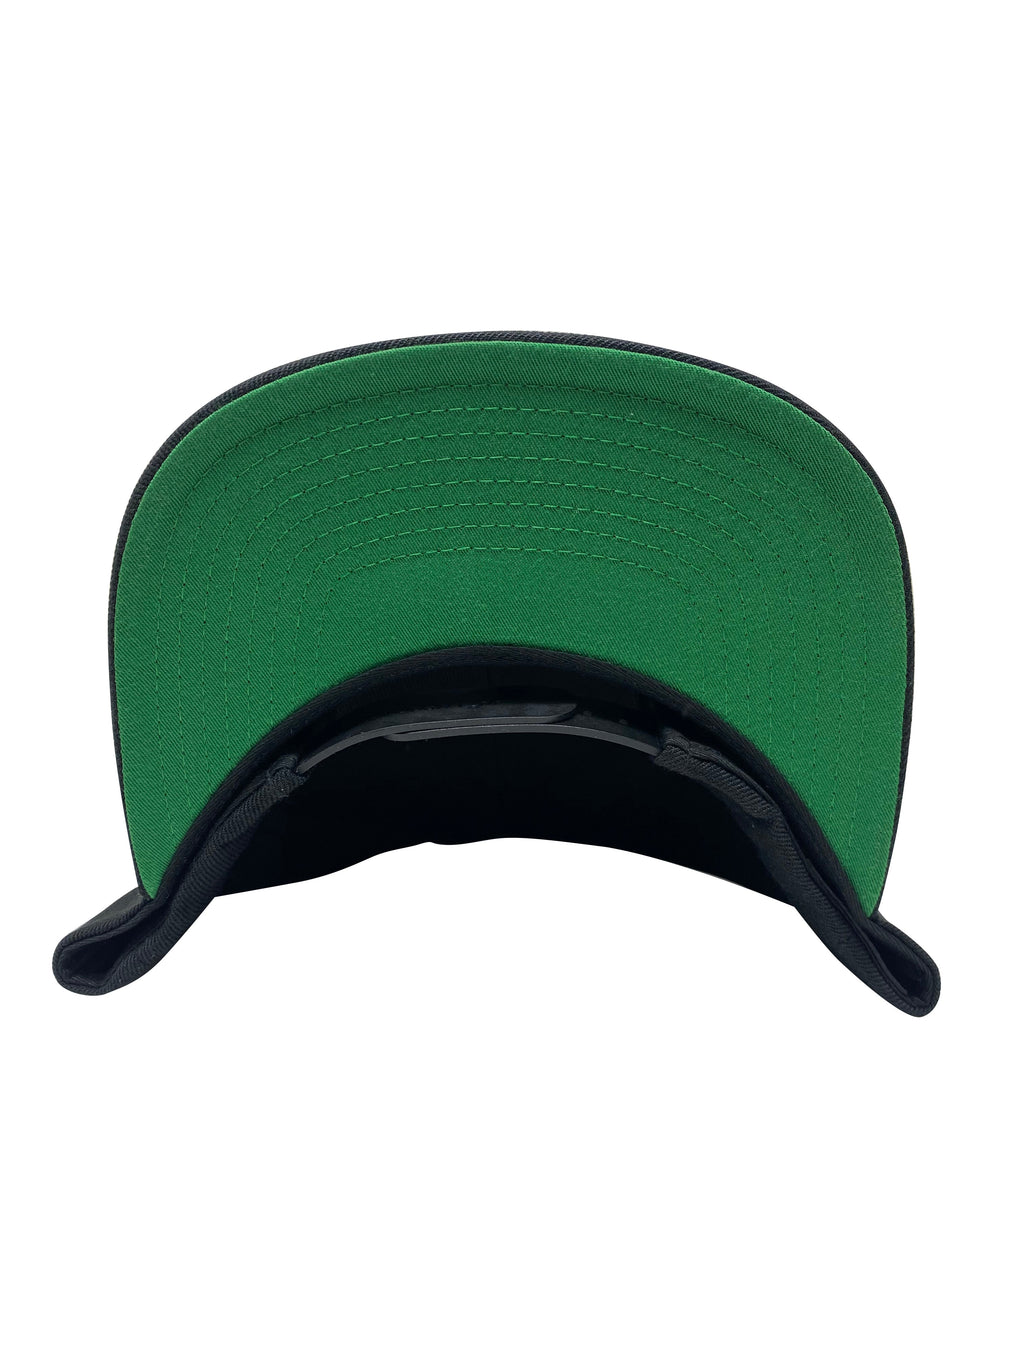 RPM BLACK Vented Snapback Flat Bill Hat